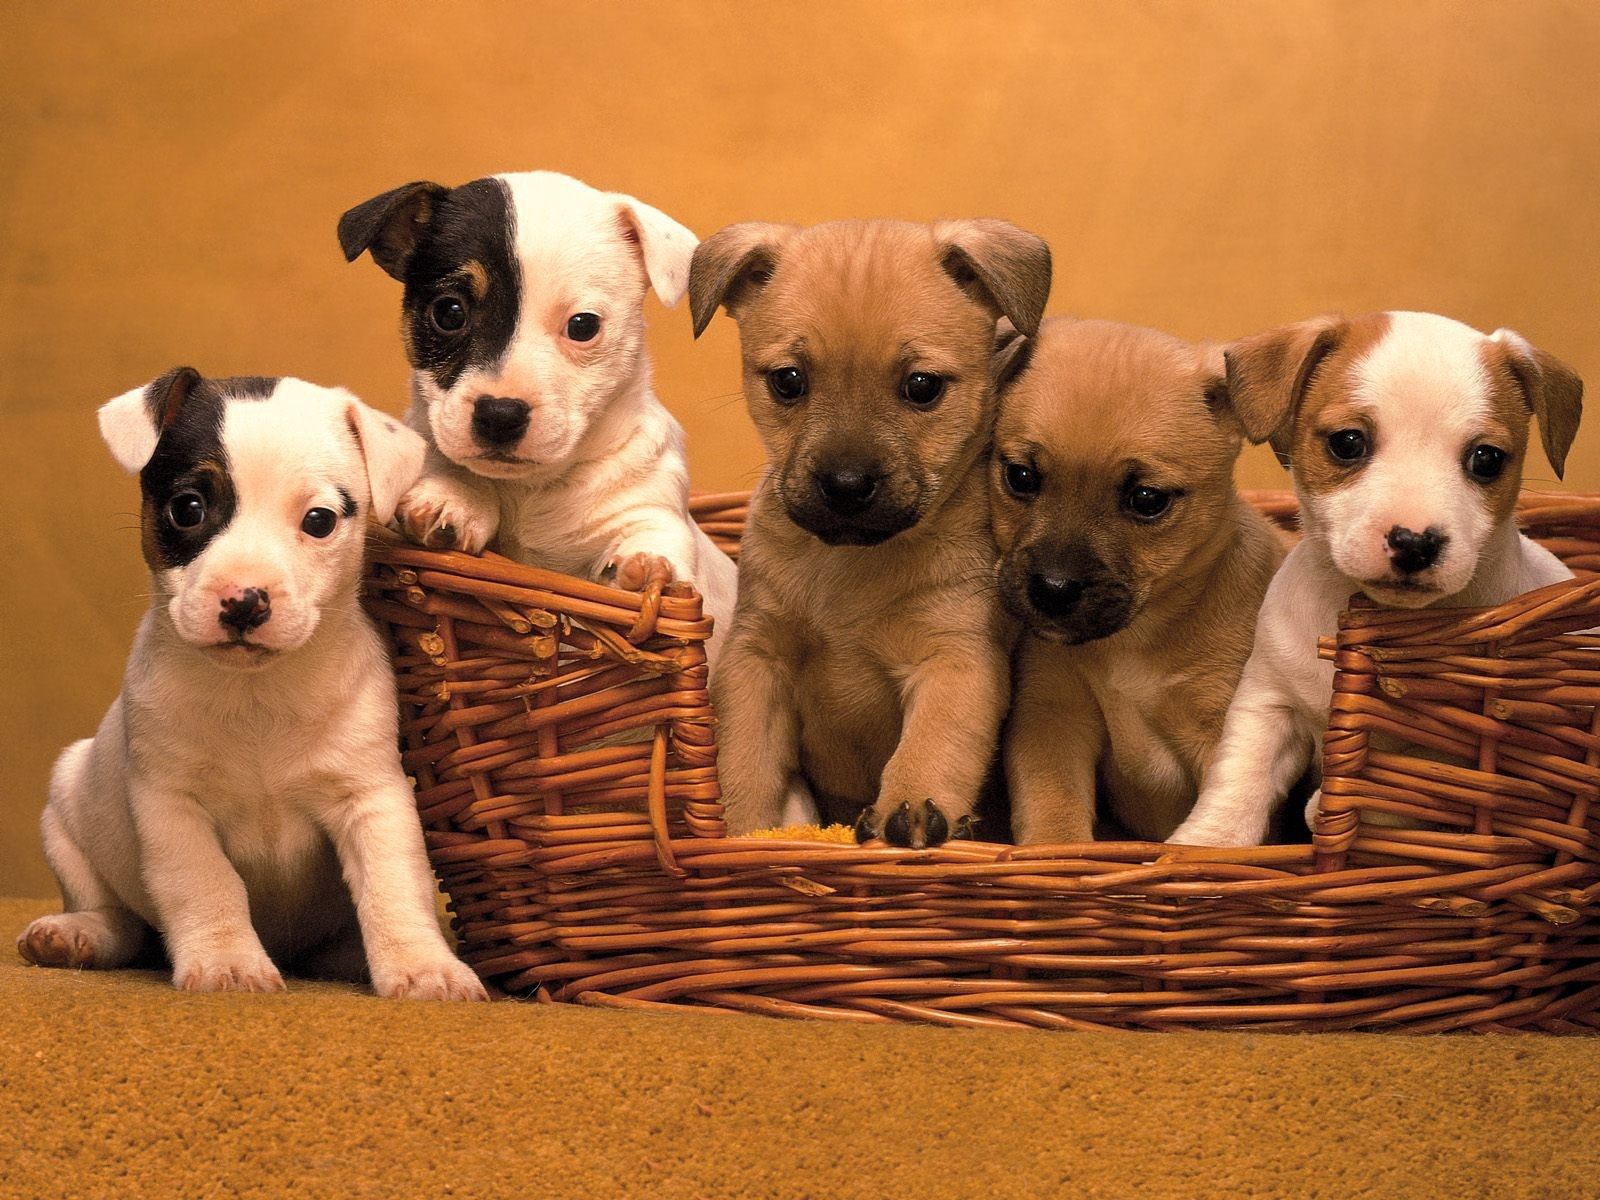 animals, puppies, muzzle, basket, lots of, multitude